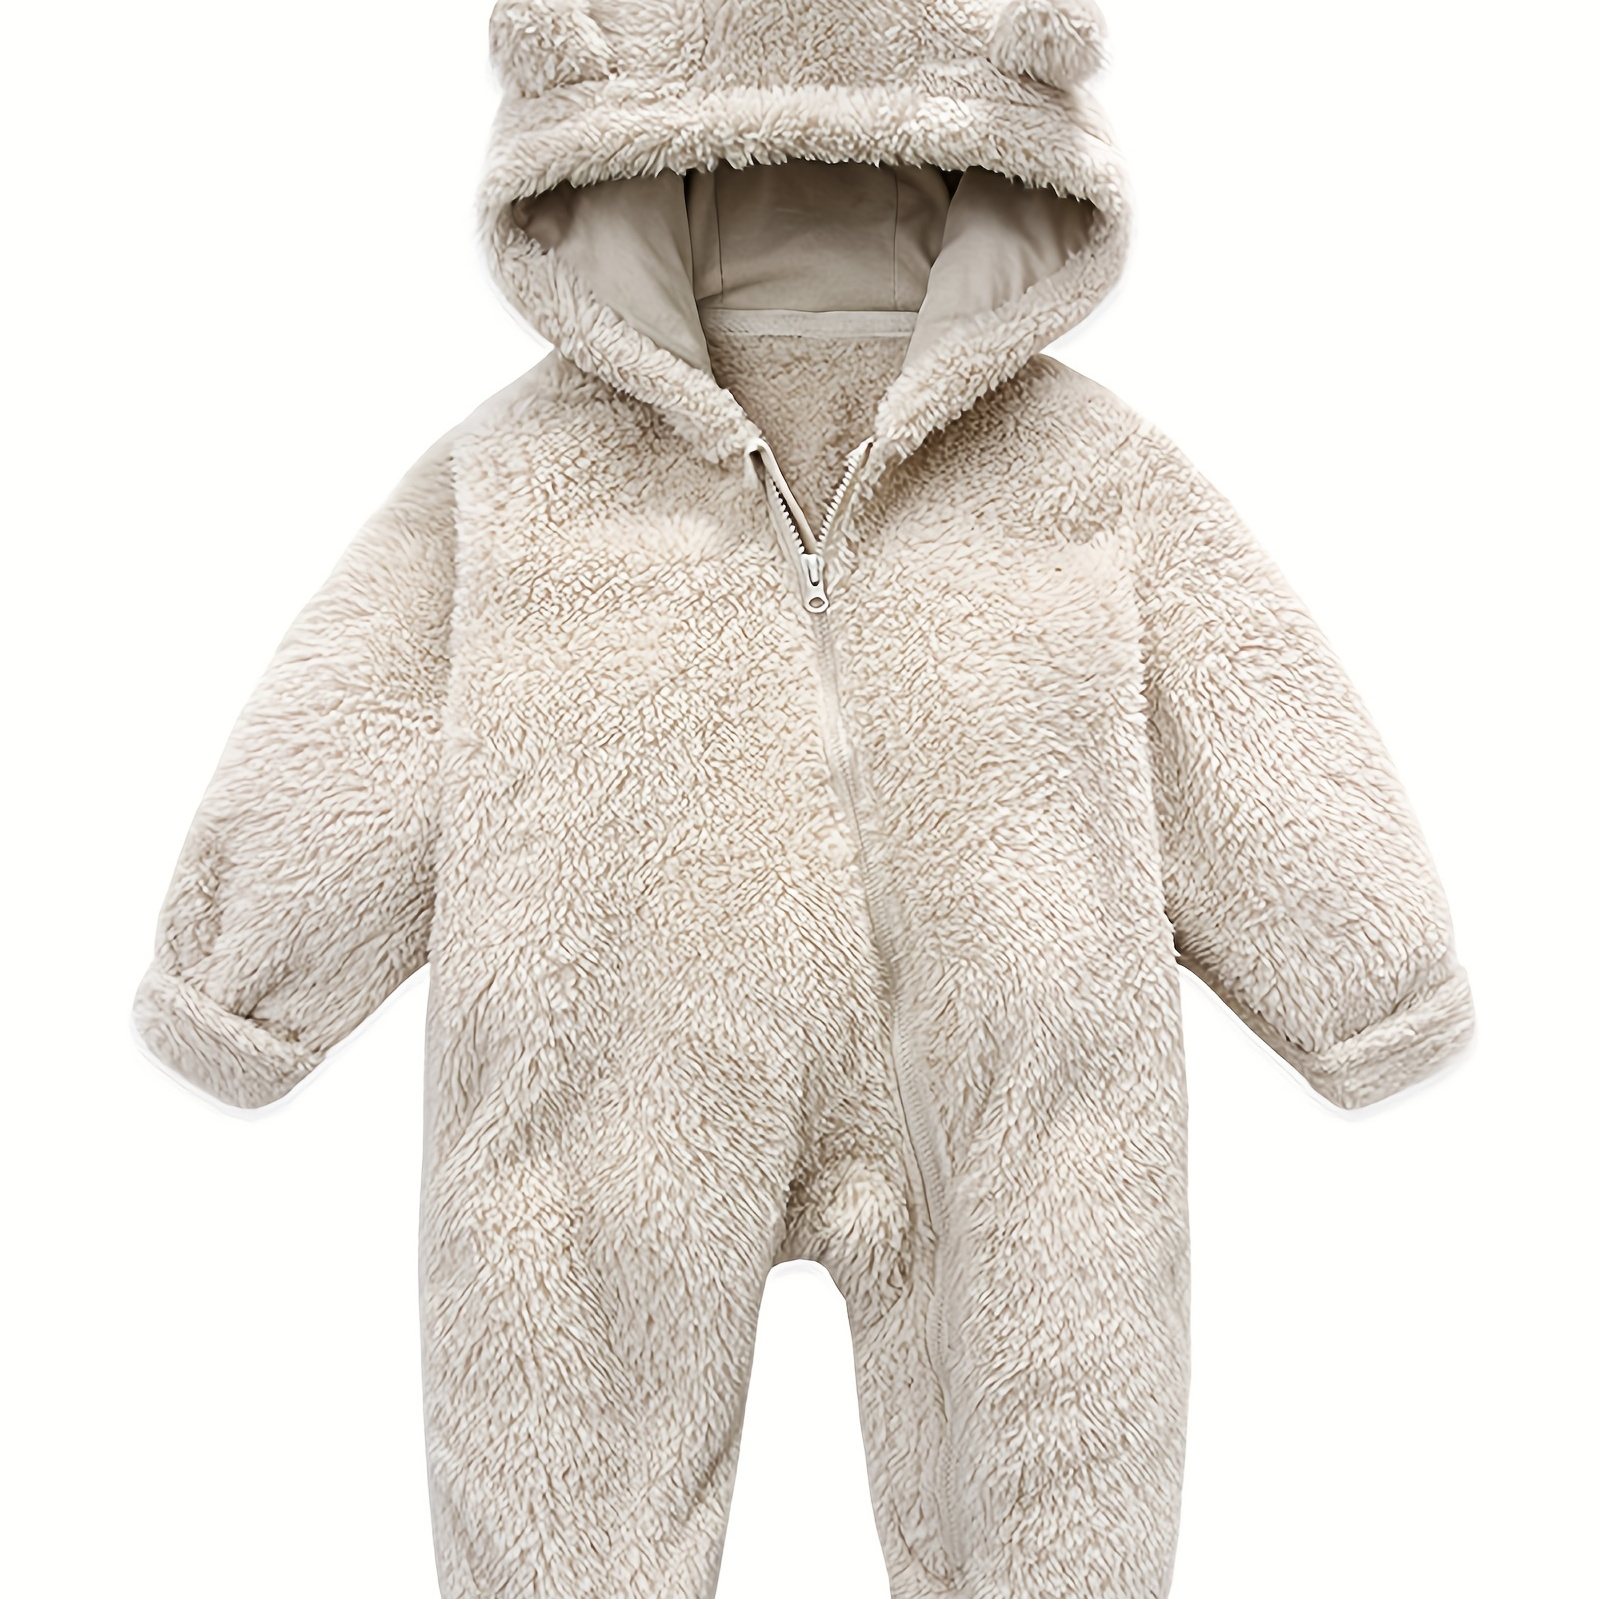 

Baby Plush Long Sleeve Polar Fleece Jumpsuit With Rabbit Ears Design For Winter New